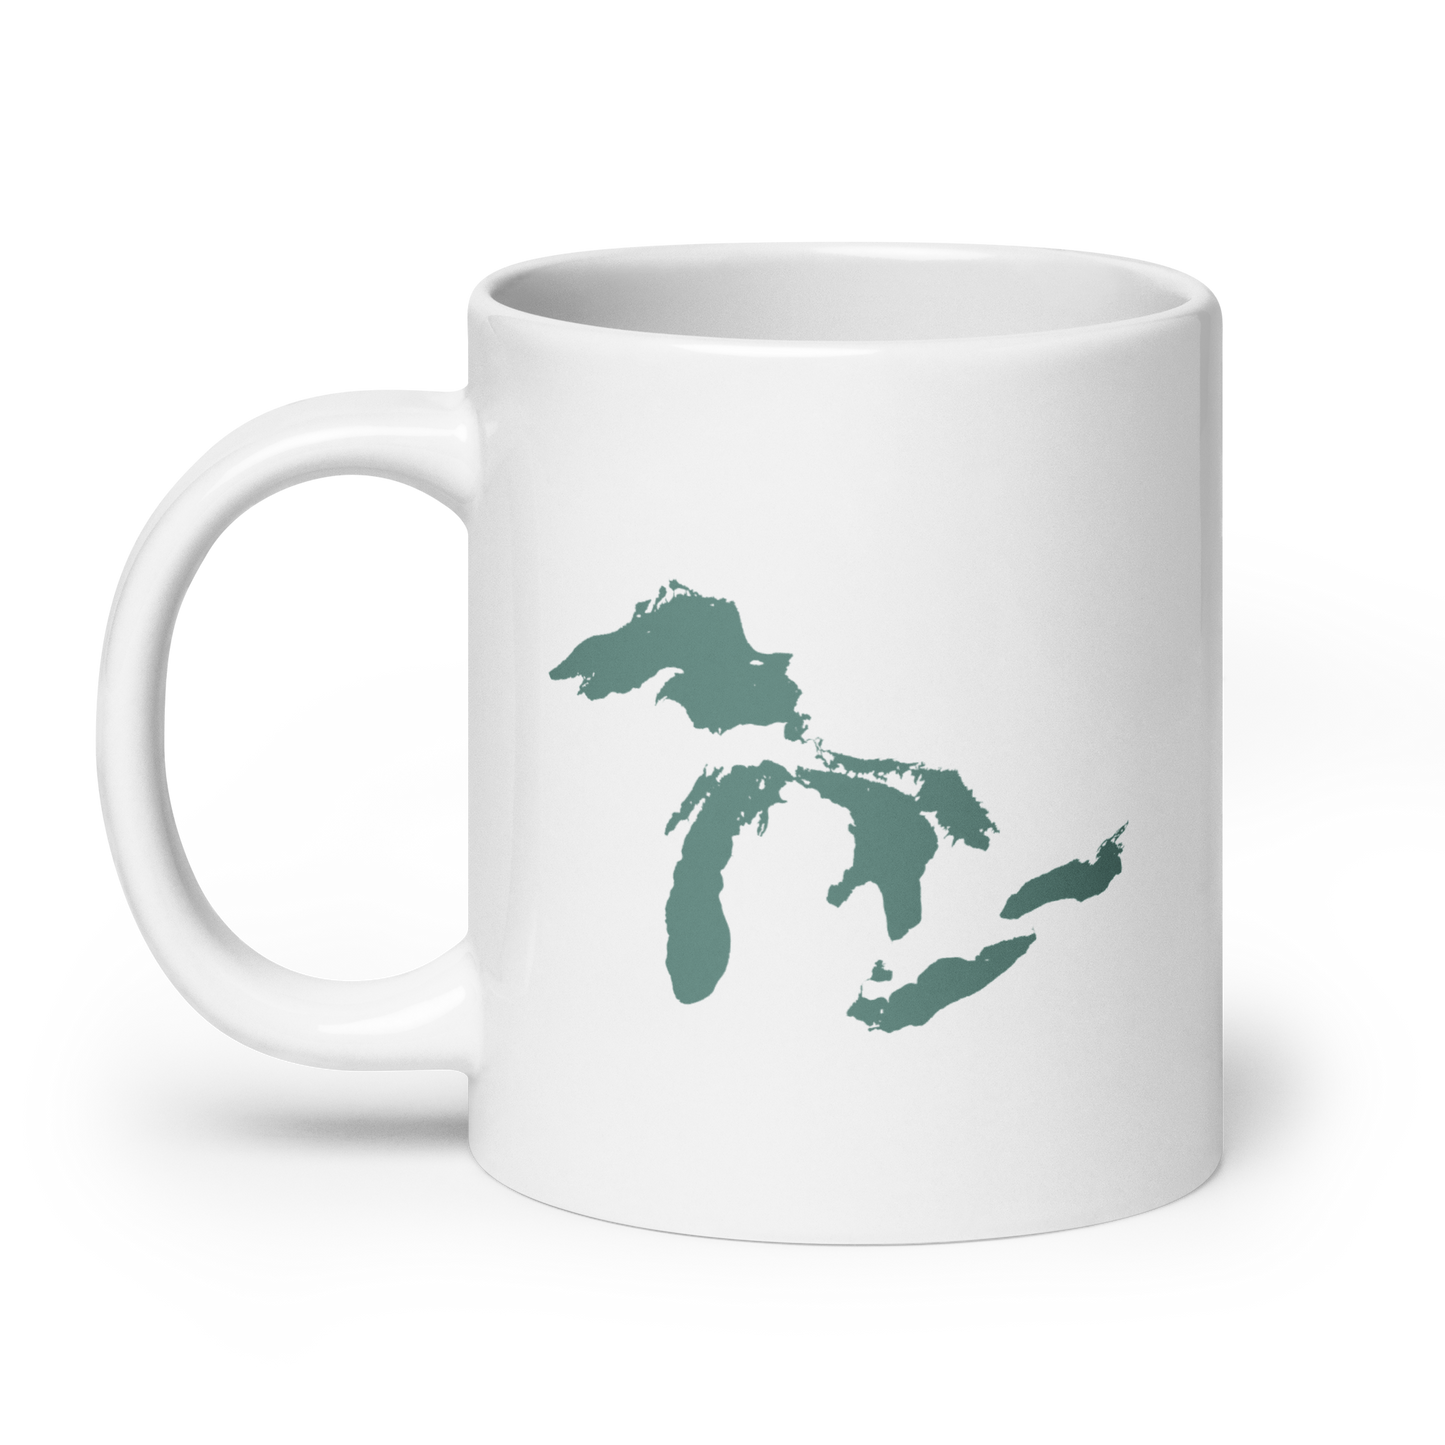 Great Lakes Mug (Copper Green)